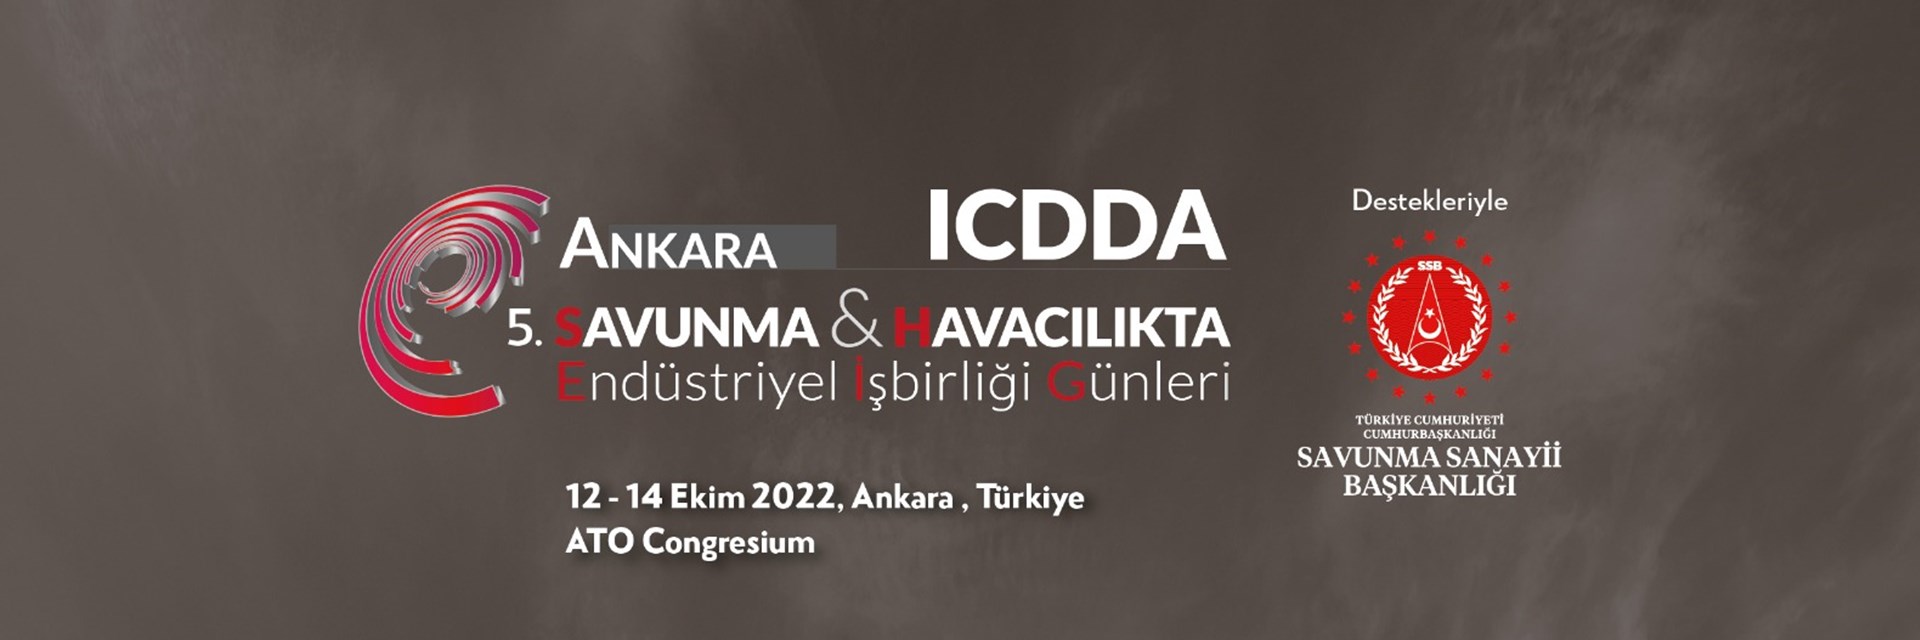 ICDDA 2022 Slider